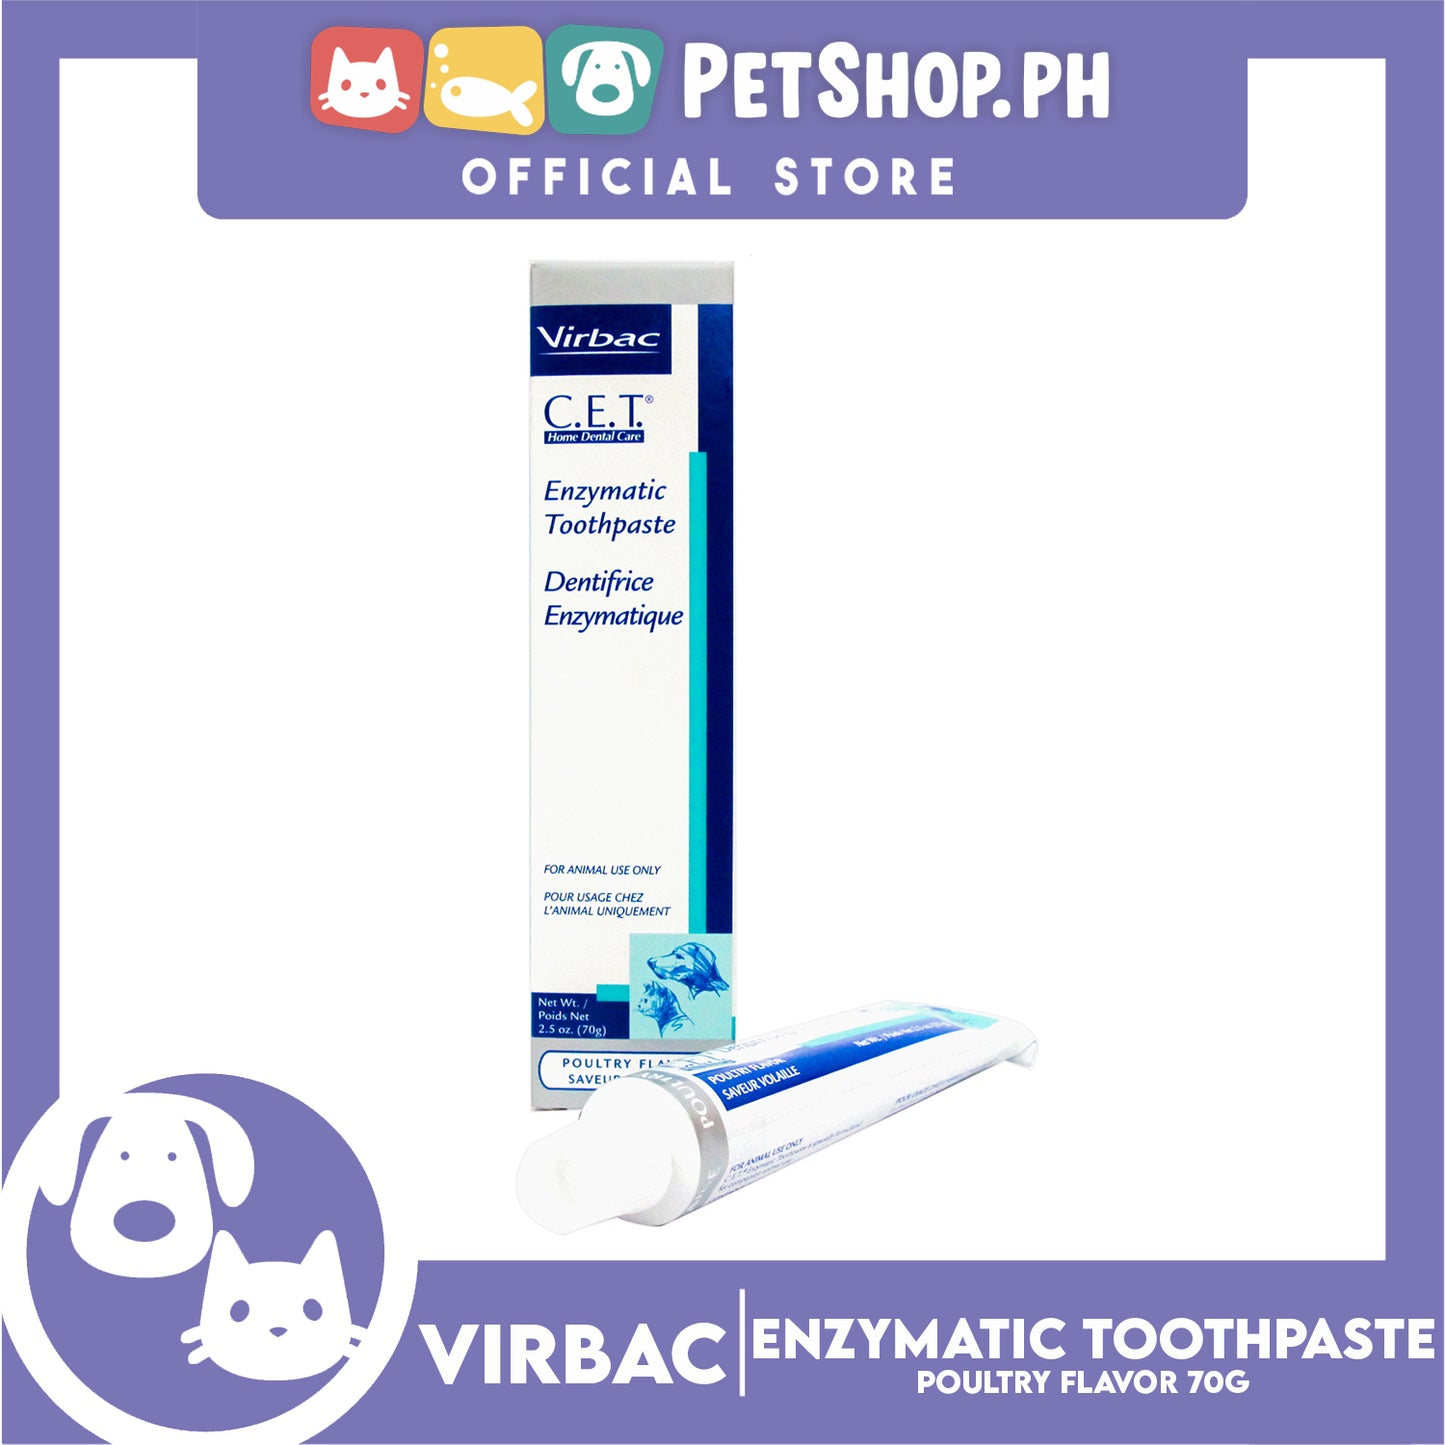 Virbac Enzymatic Toothpaste 70g